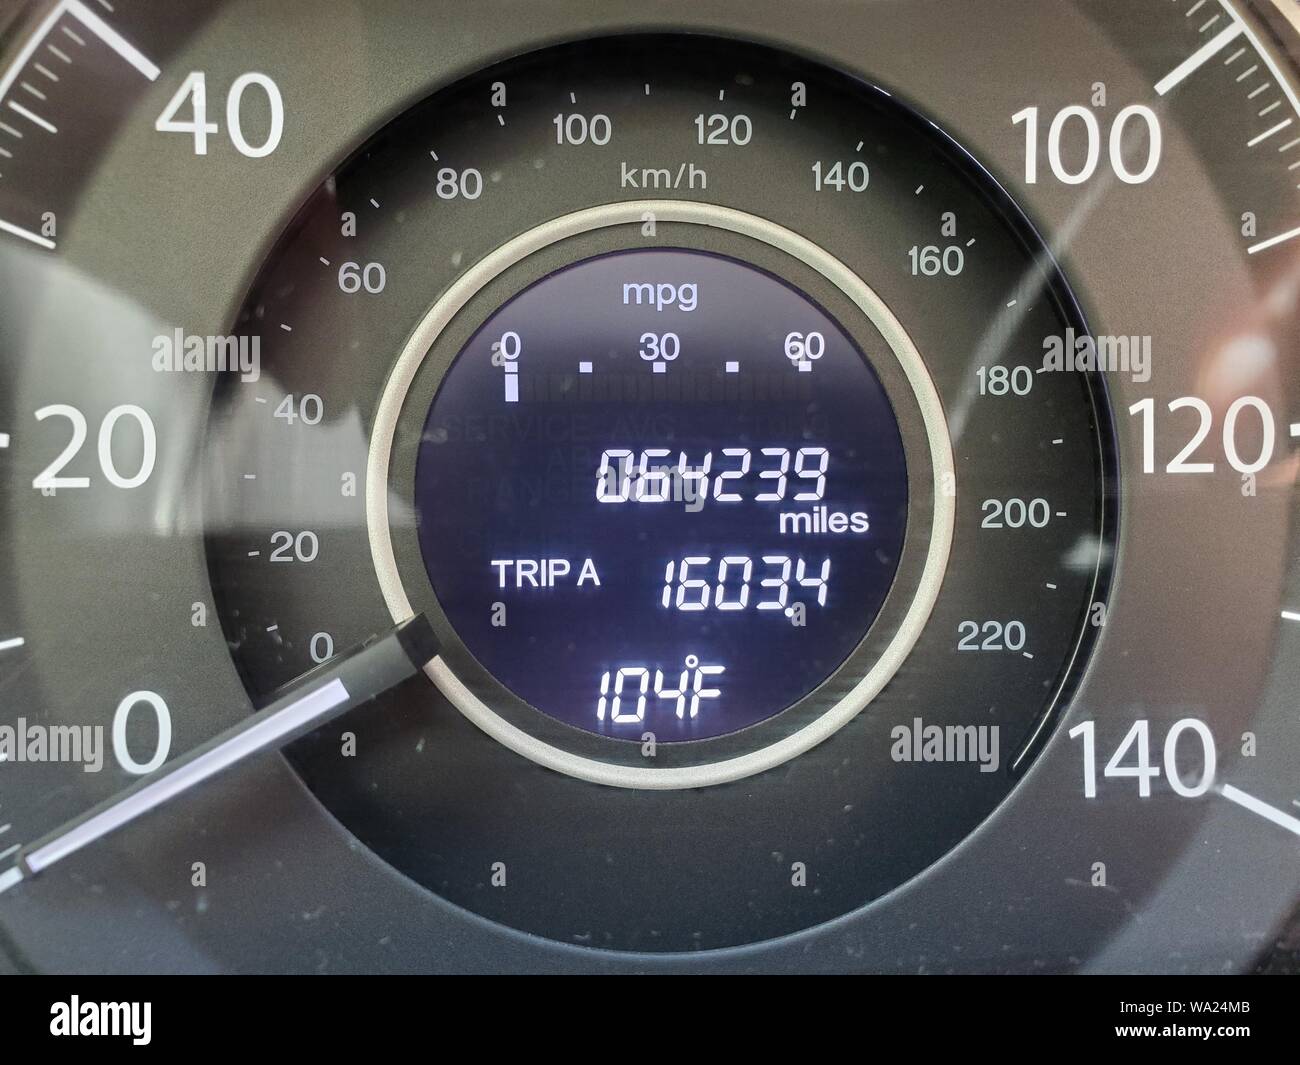 https://c8.alamy.com/comp/WA24MB/close-up-of-vehicle-temperature-sensor-reading-104f-during-a-heat-wave-august-15-2019-WA24MB.jpg